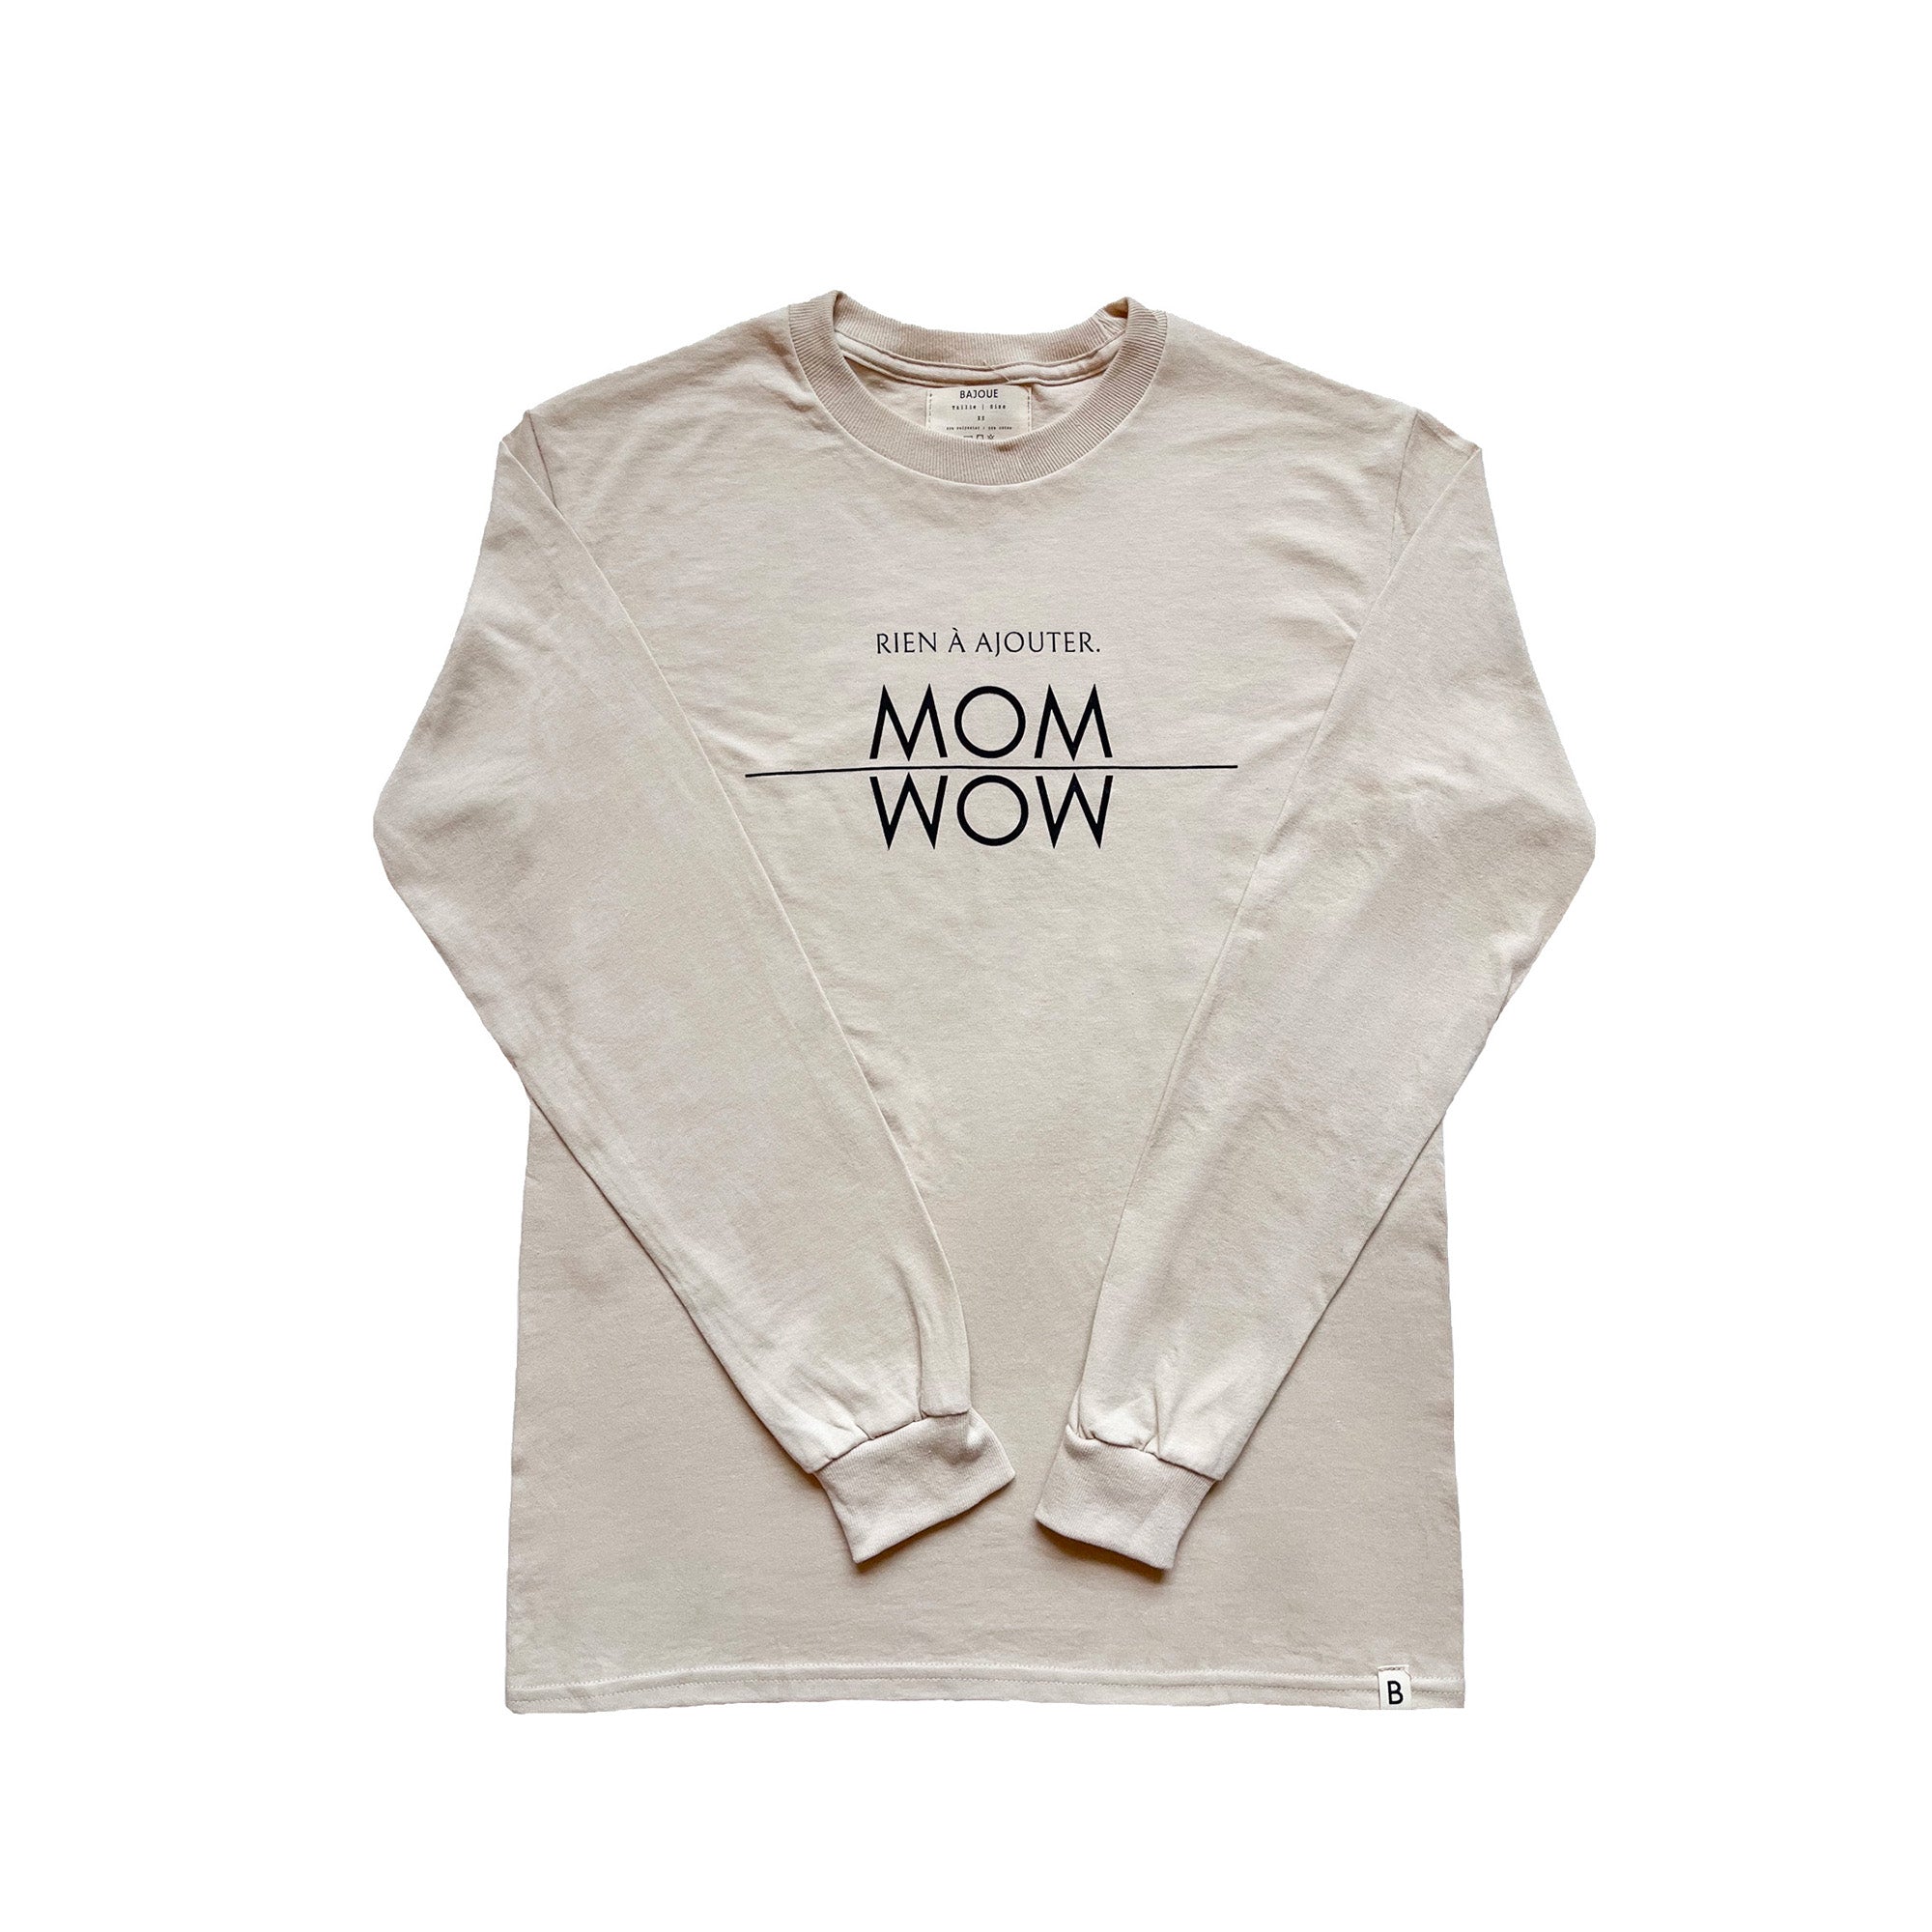 Chandail pour femmes-Wow/Mom